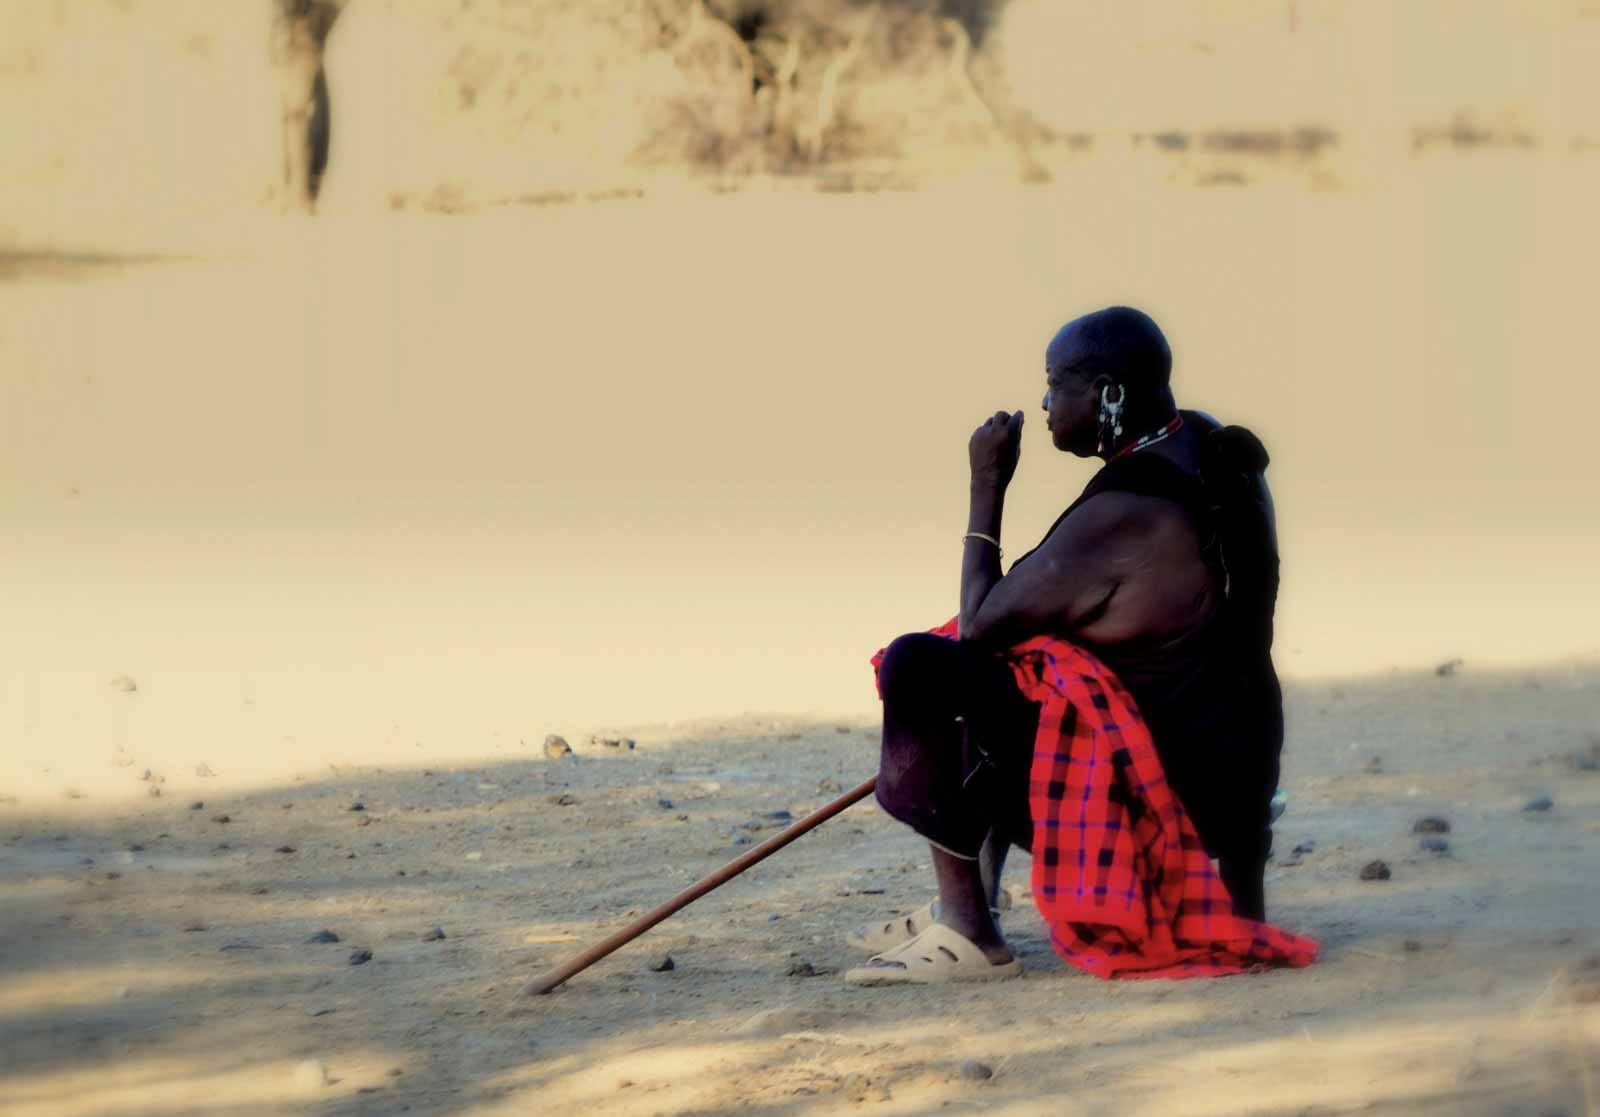 Jefe Masai